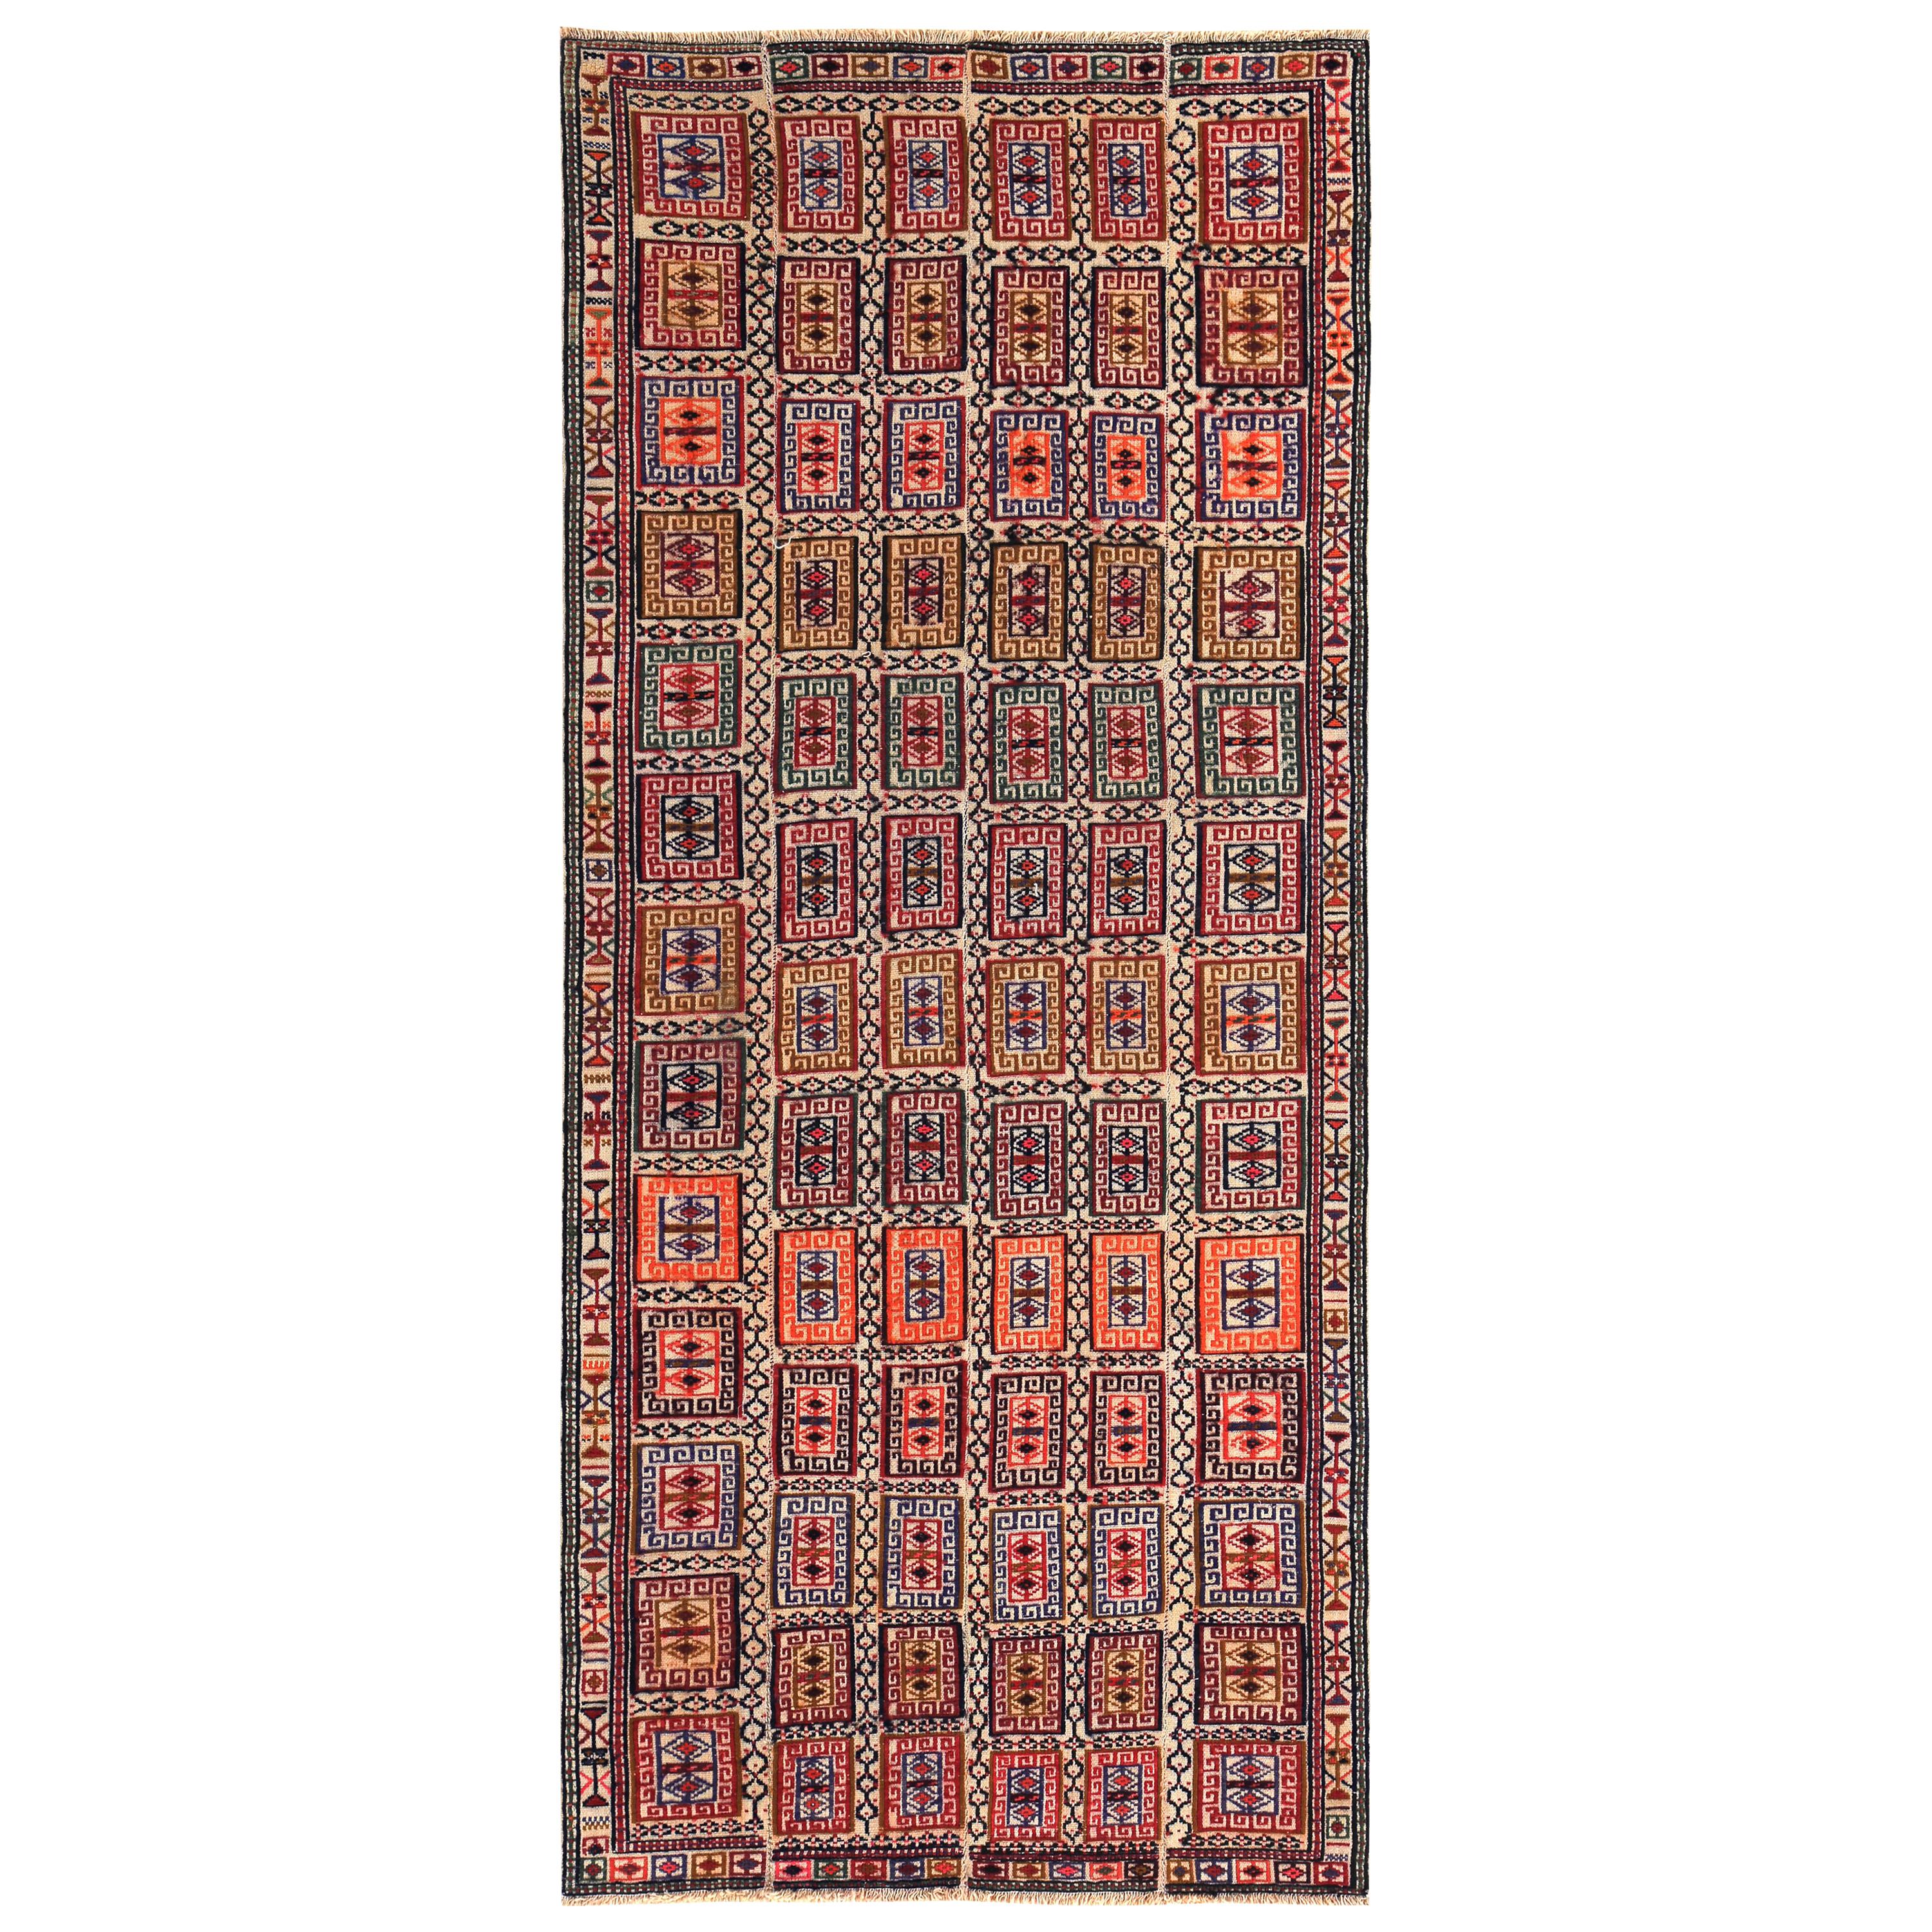 Modern Turkish Kilim Rug with Red, Blue and Orange Tribal Blocks on Beige Field For Sale